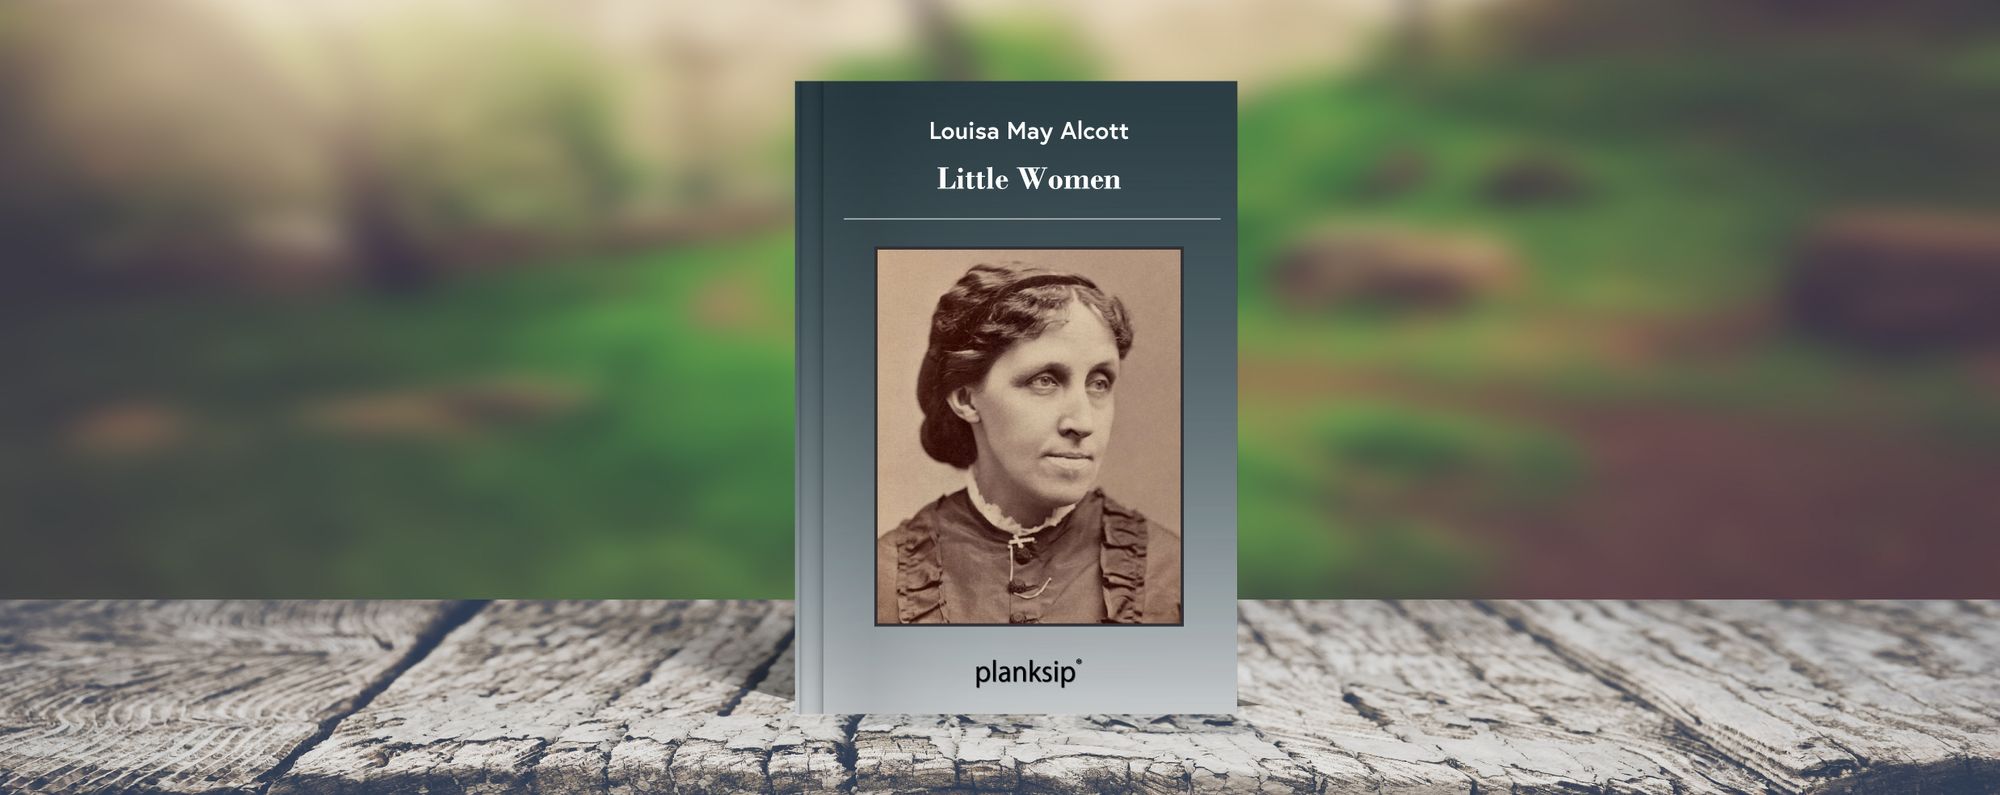 Little Women by Louisa May Alcott (1832-1888). Published by planksip